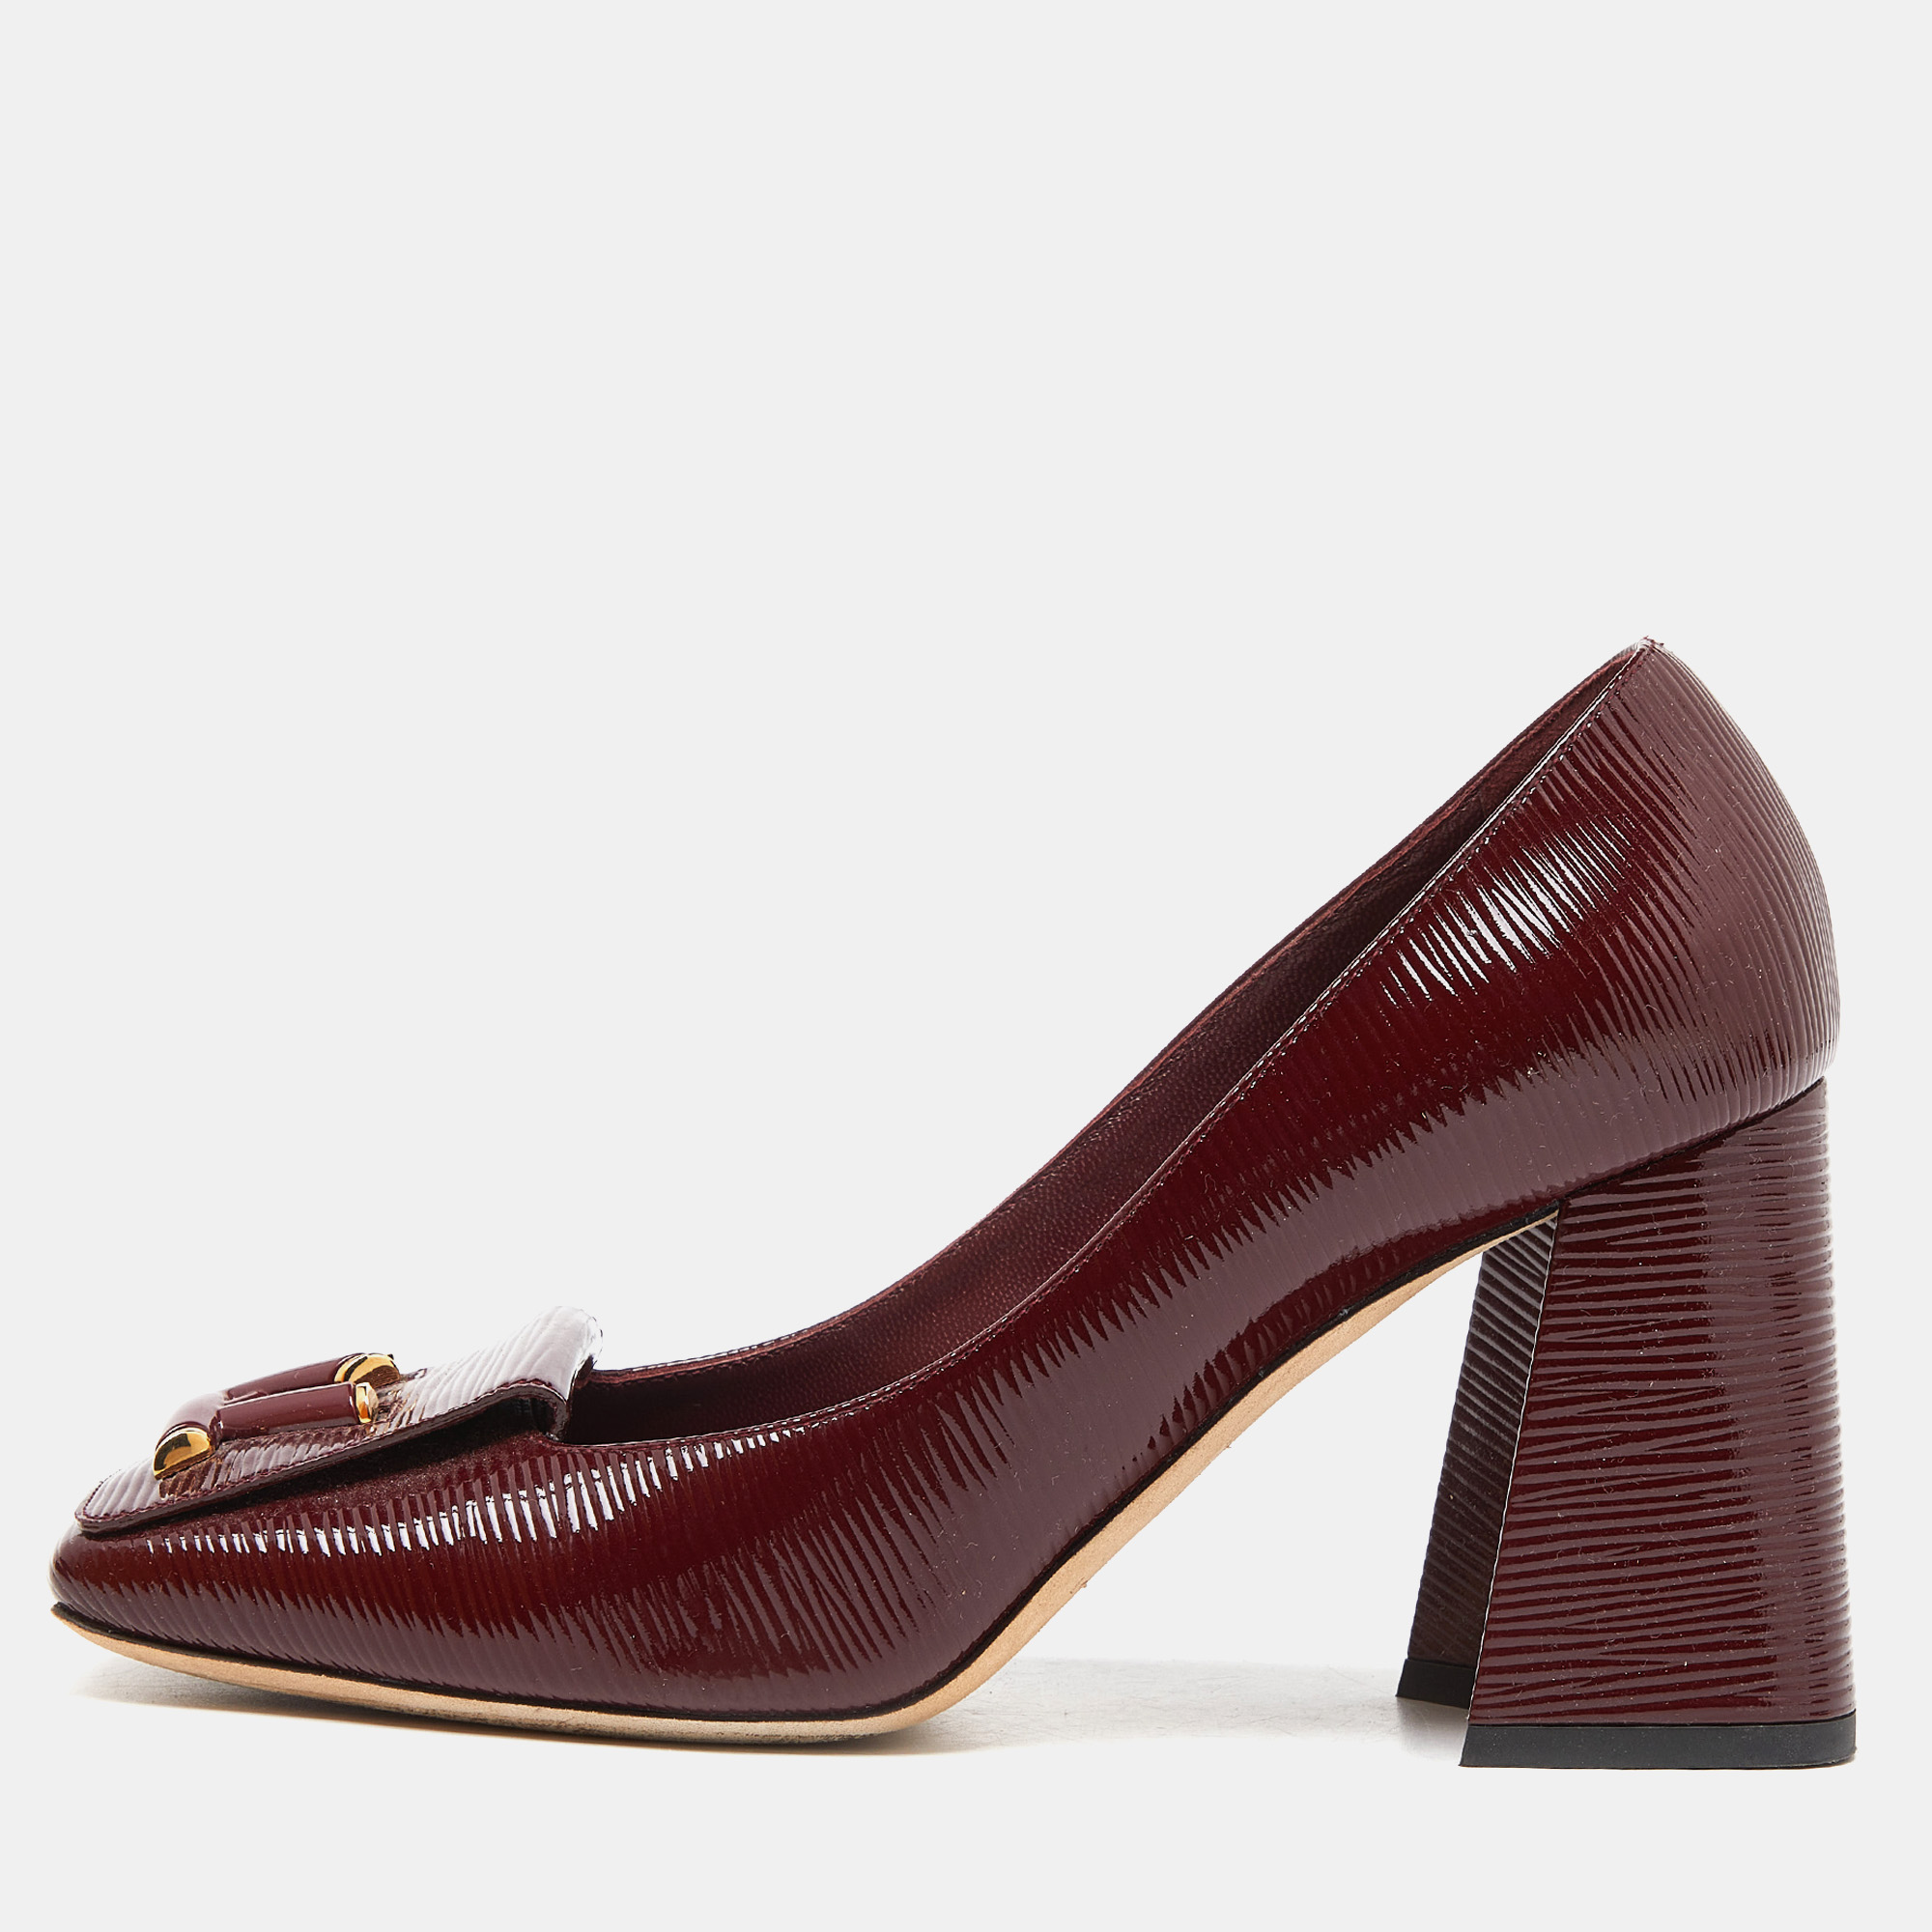 Louis vuitton burgundy patent leather block heel pumps size 37